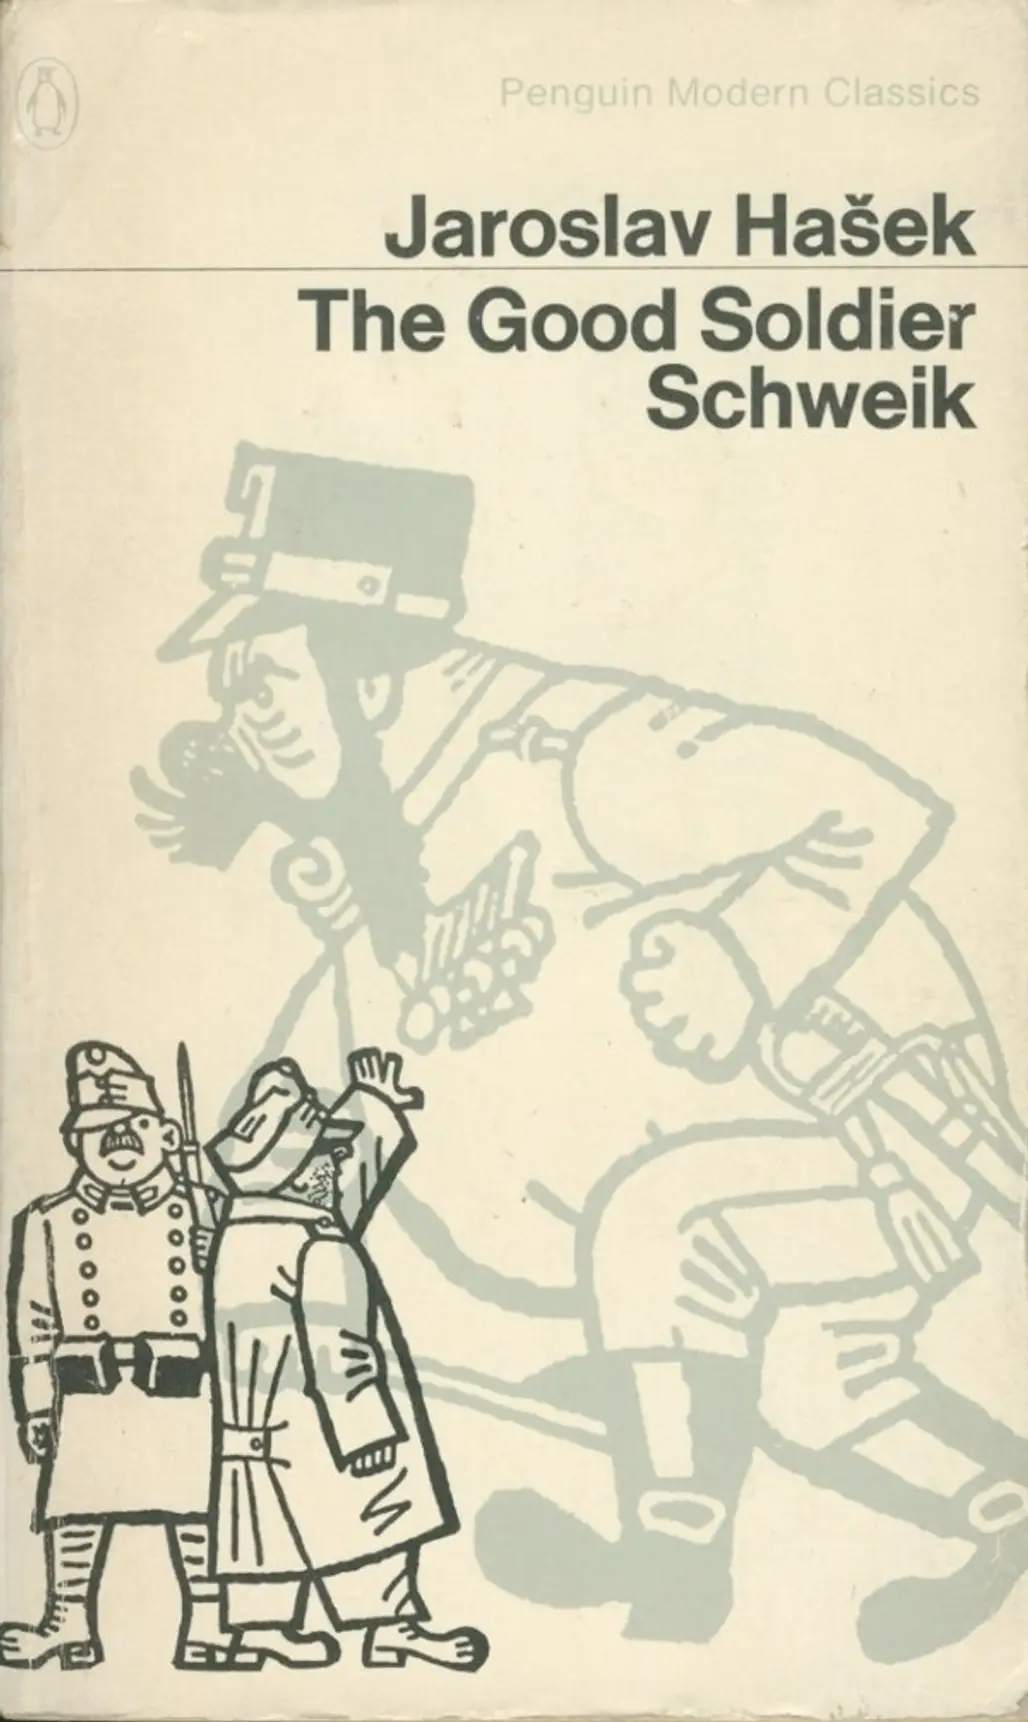 The Good Soldier Švejk by Jaroslav Hašek (1923)